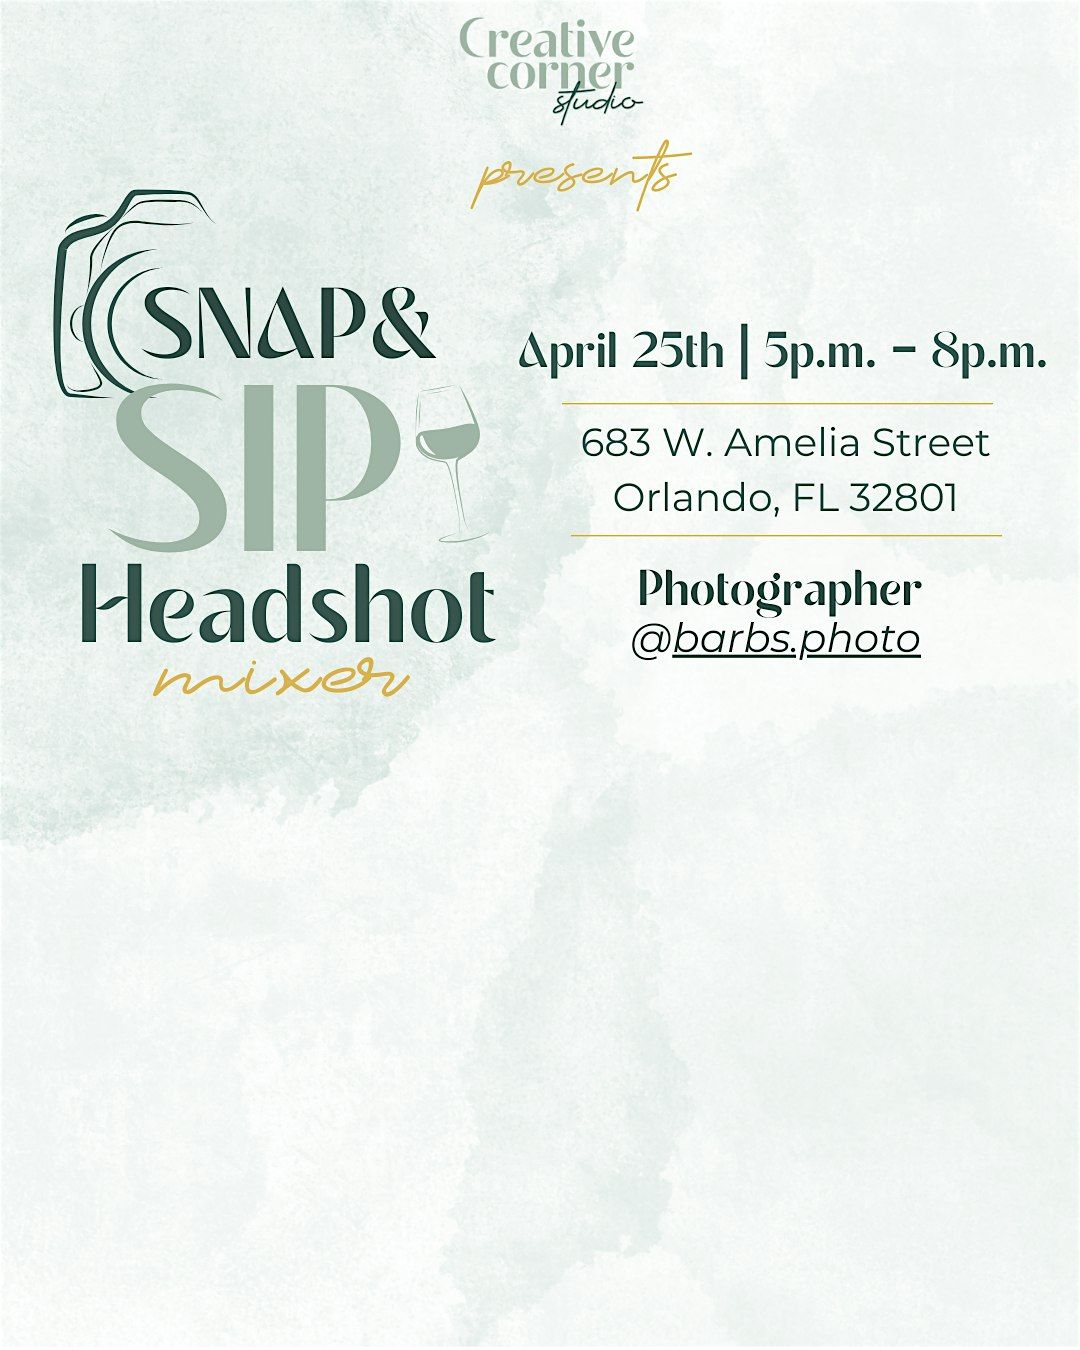 Snap & Sip Headshot Mixer